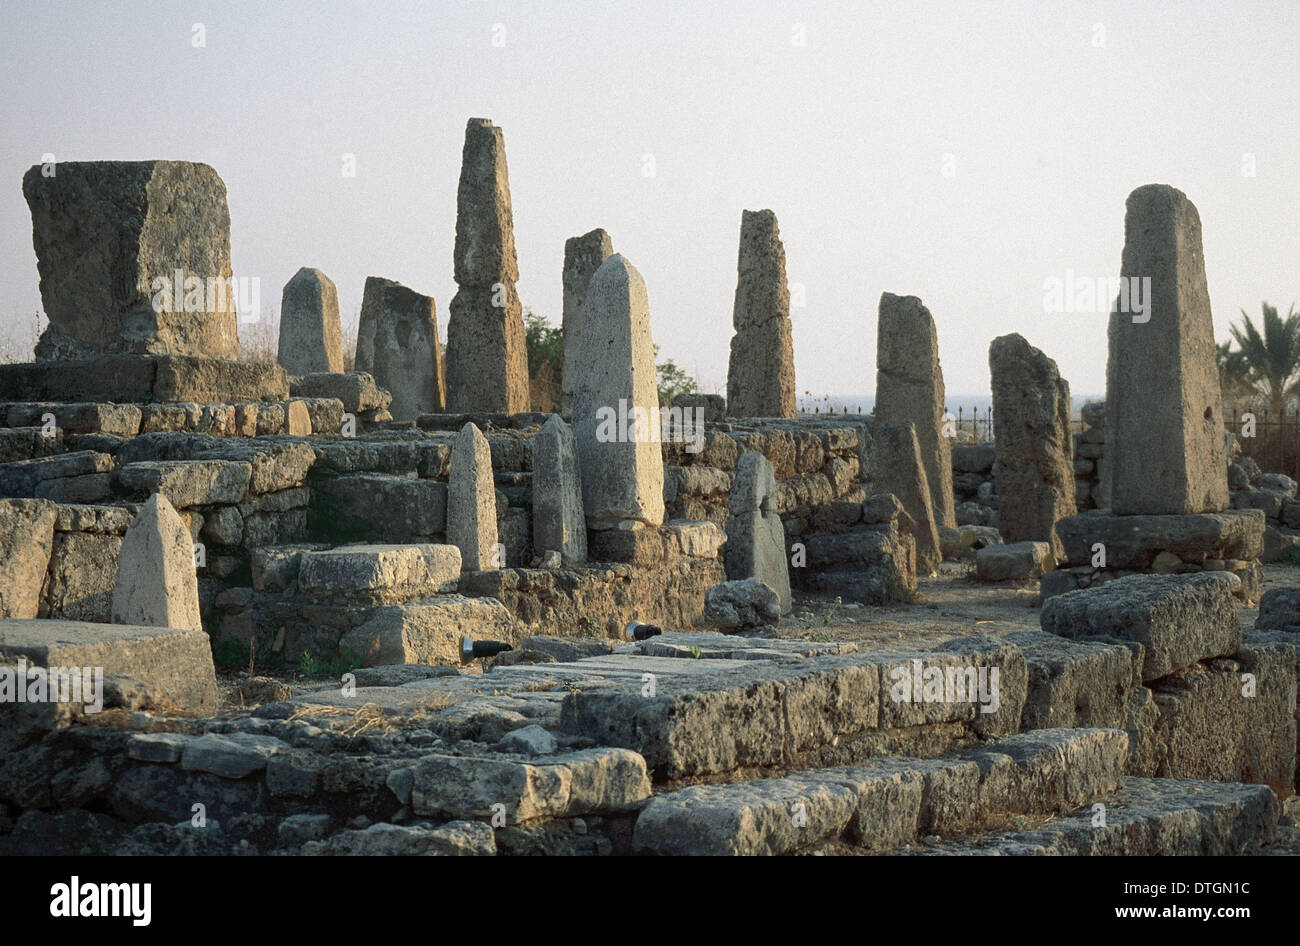 Libanon. Byblos. Tempel der Obelisken. Phönizische Tempel erbaut ca. 1600 v. Chr. World Heritage Site. Stockfoto